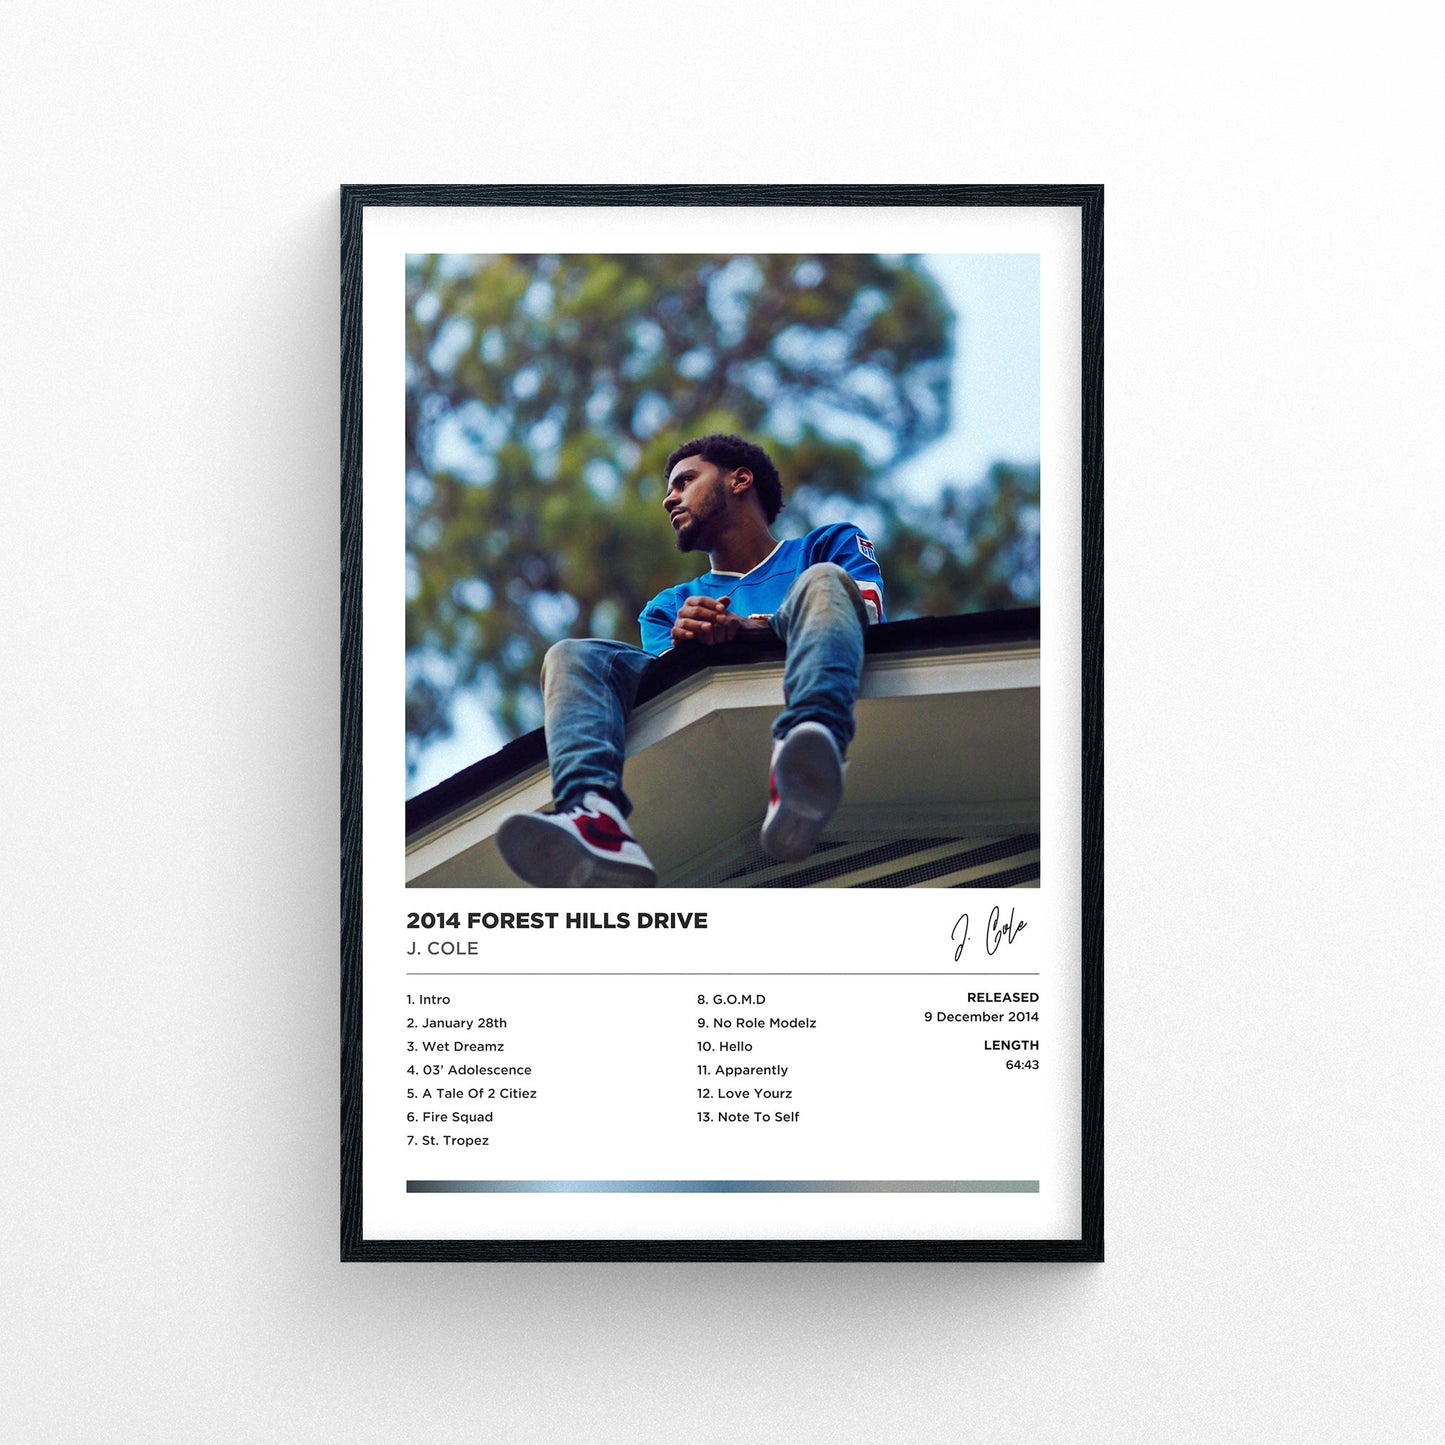 J Cole - 2014 Forest Hills Drive Framed Poster Print | Polaroid Style | Album Cover Artwork